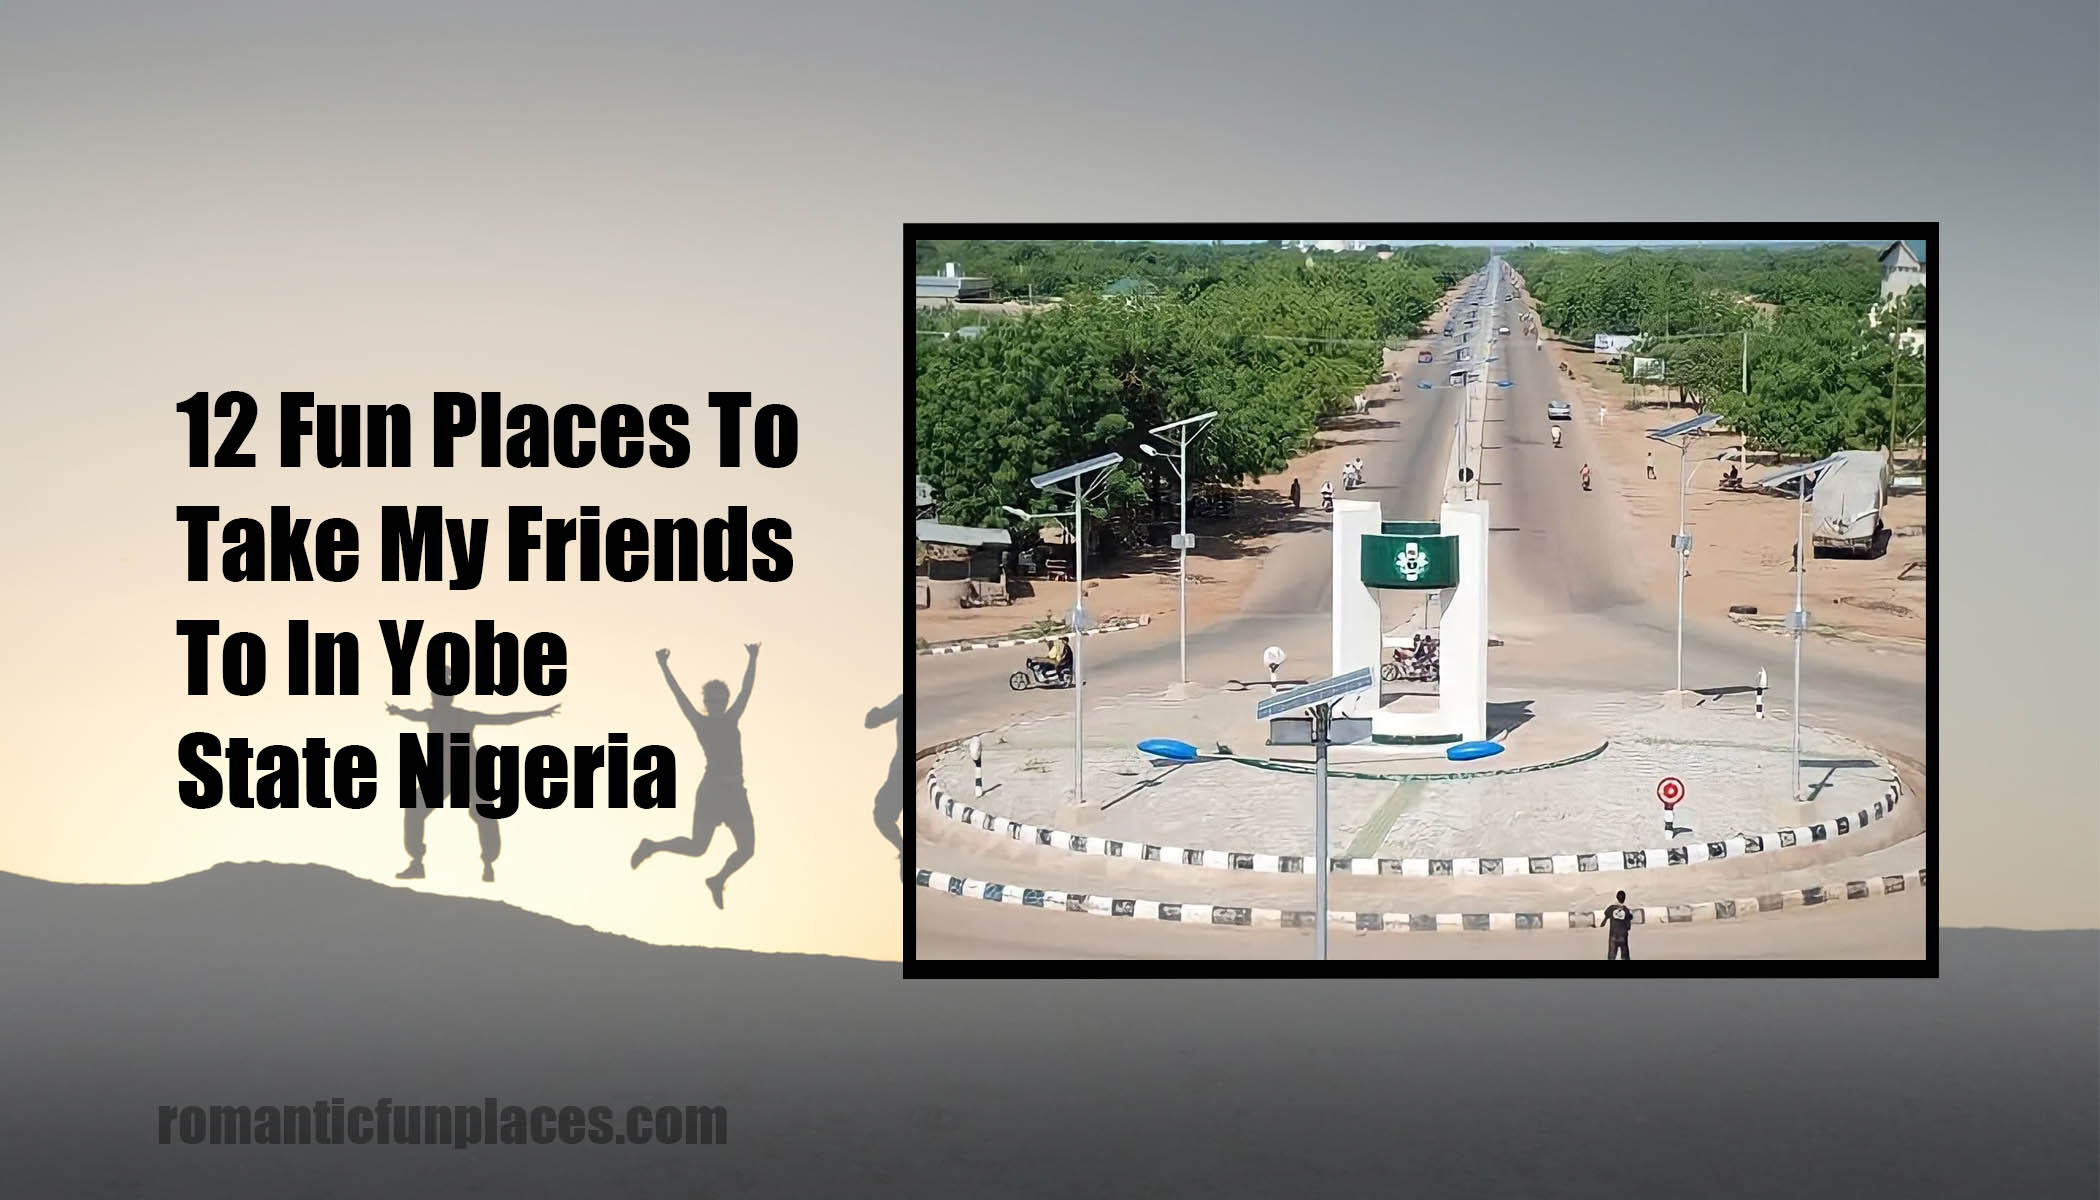 12 Fun Places To Take My Friends To In Yobe State Nigeria